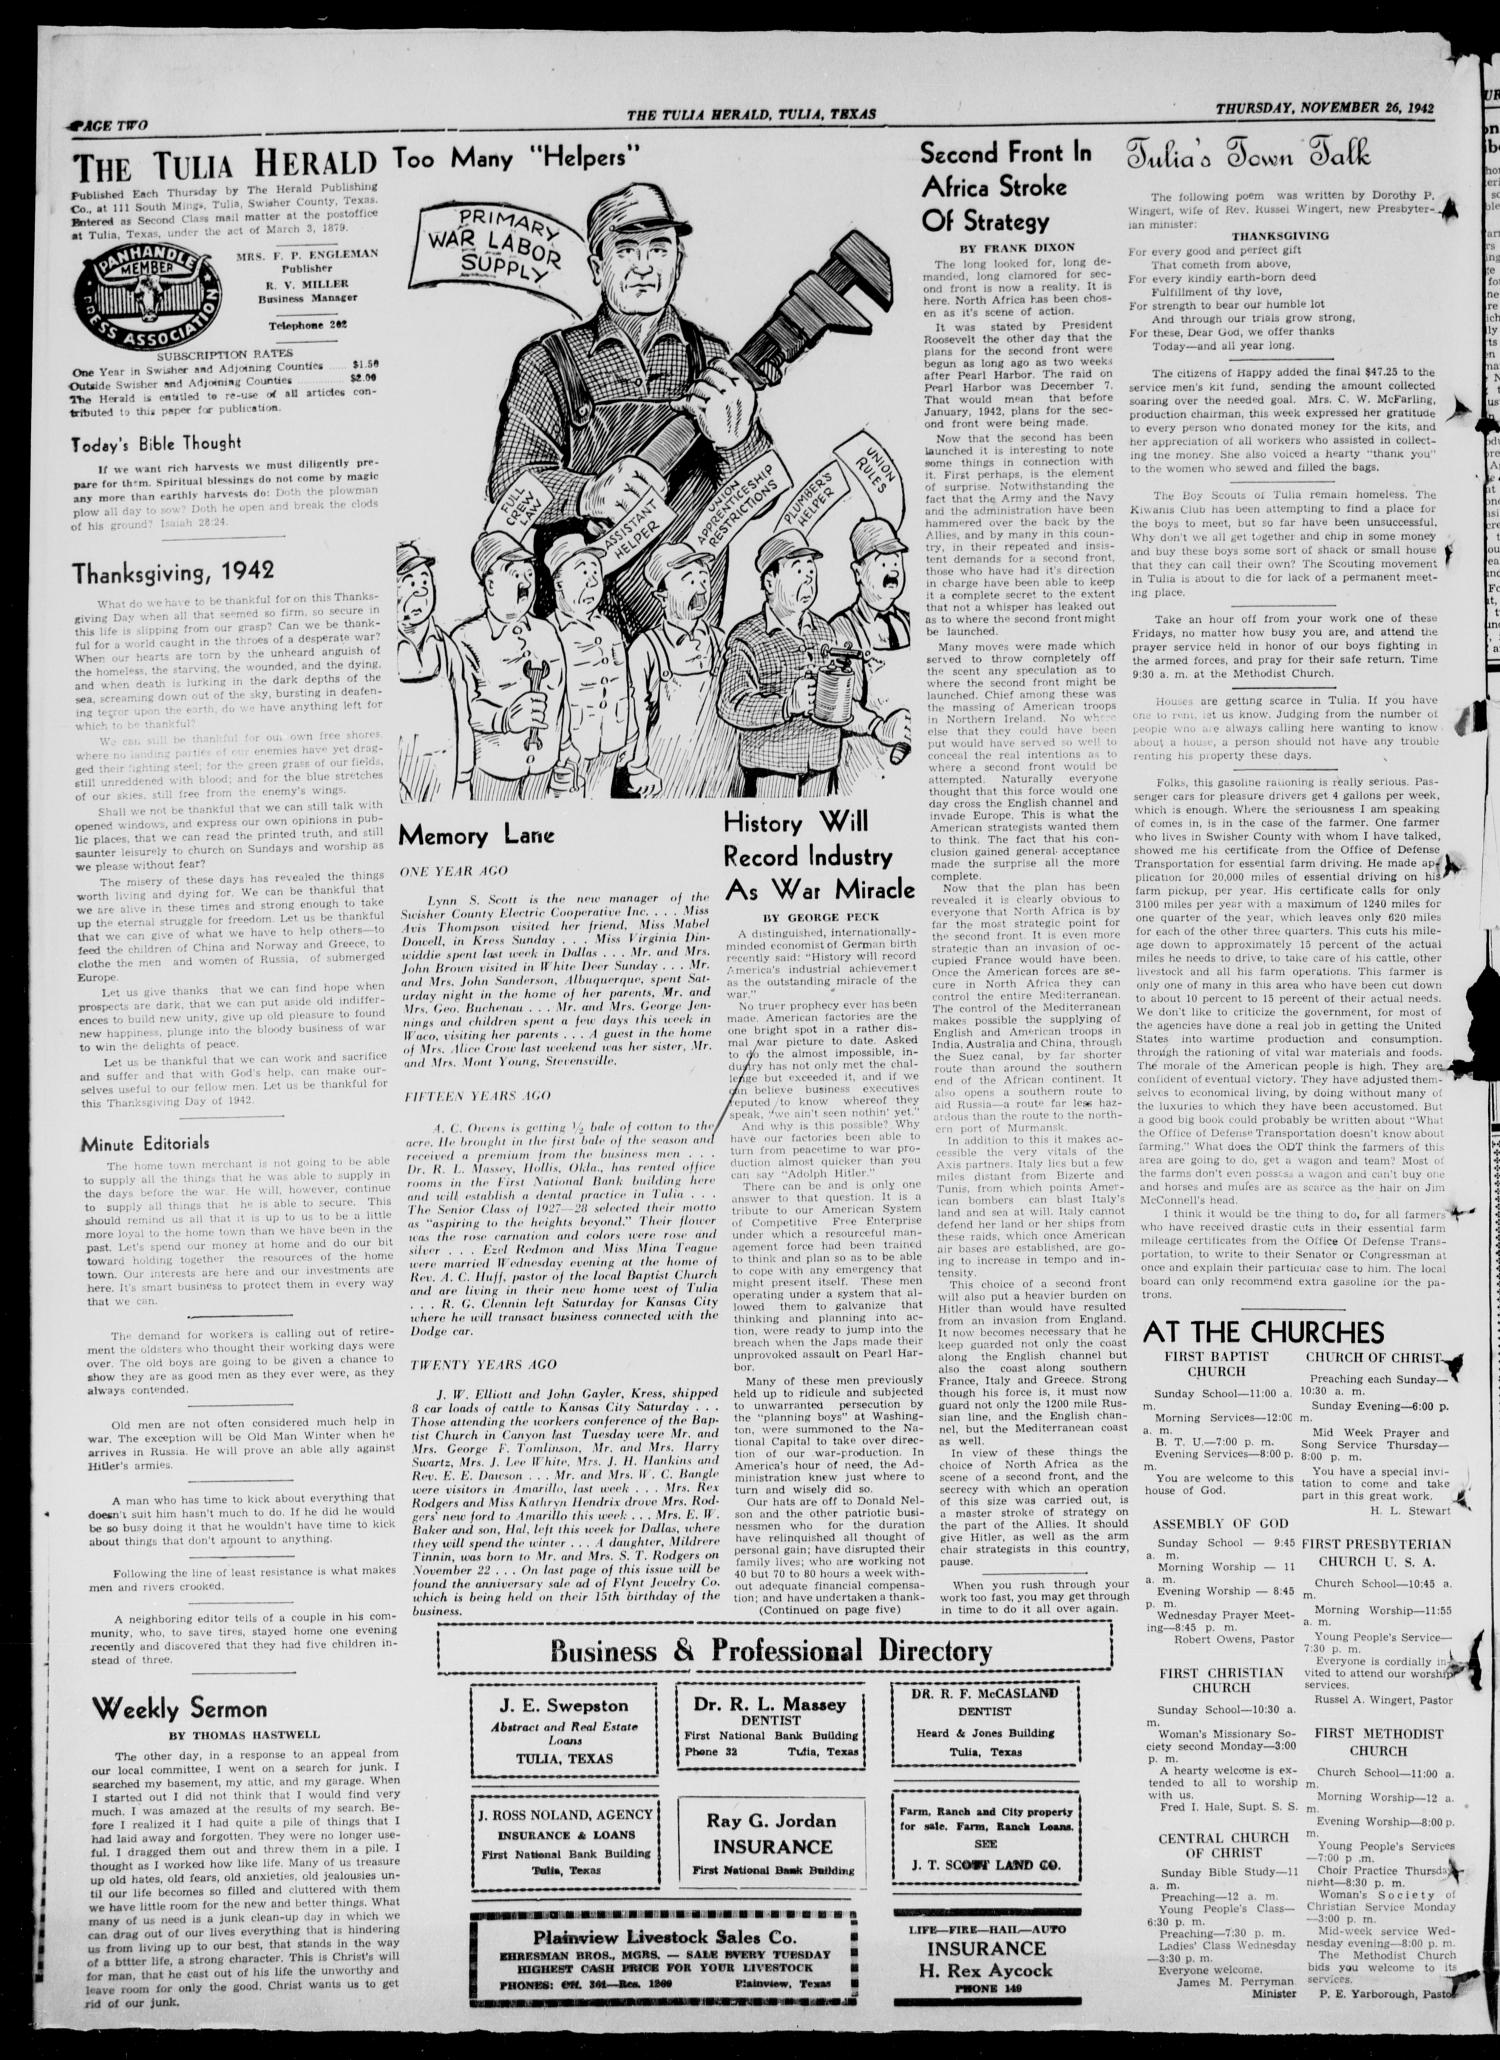 The Tulia Herald (Tulia, Tex), Vol. 33, No. 48, Ed. 1, Thursday, November 26, 1942
                                                
                                                    2
                                                